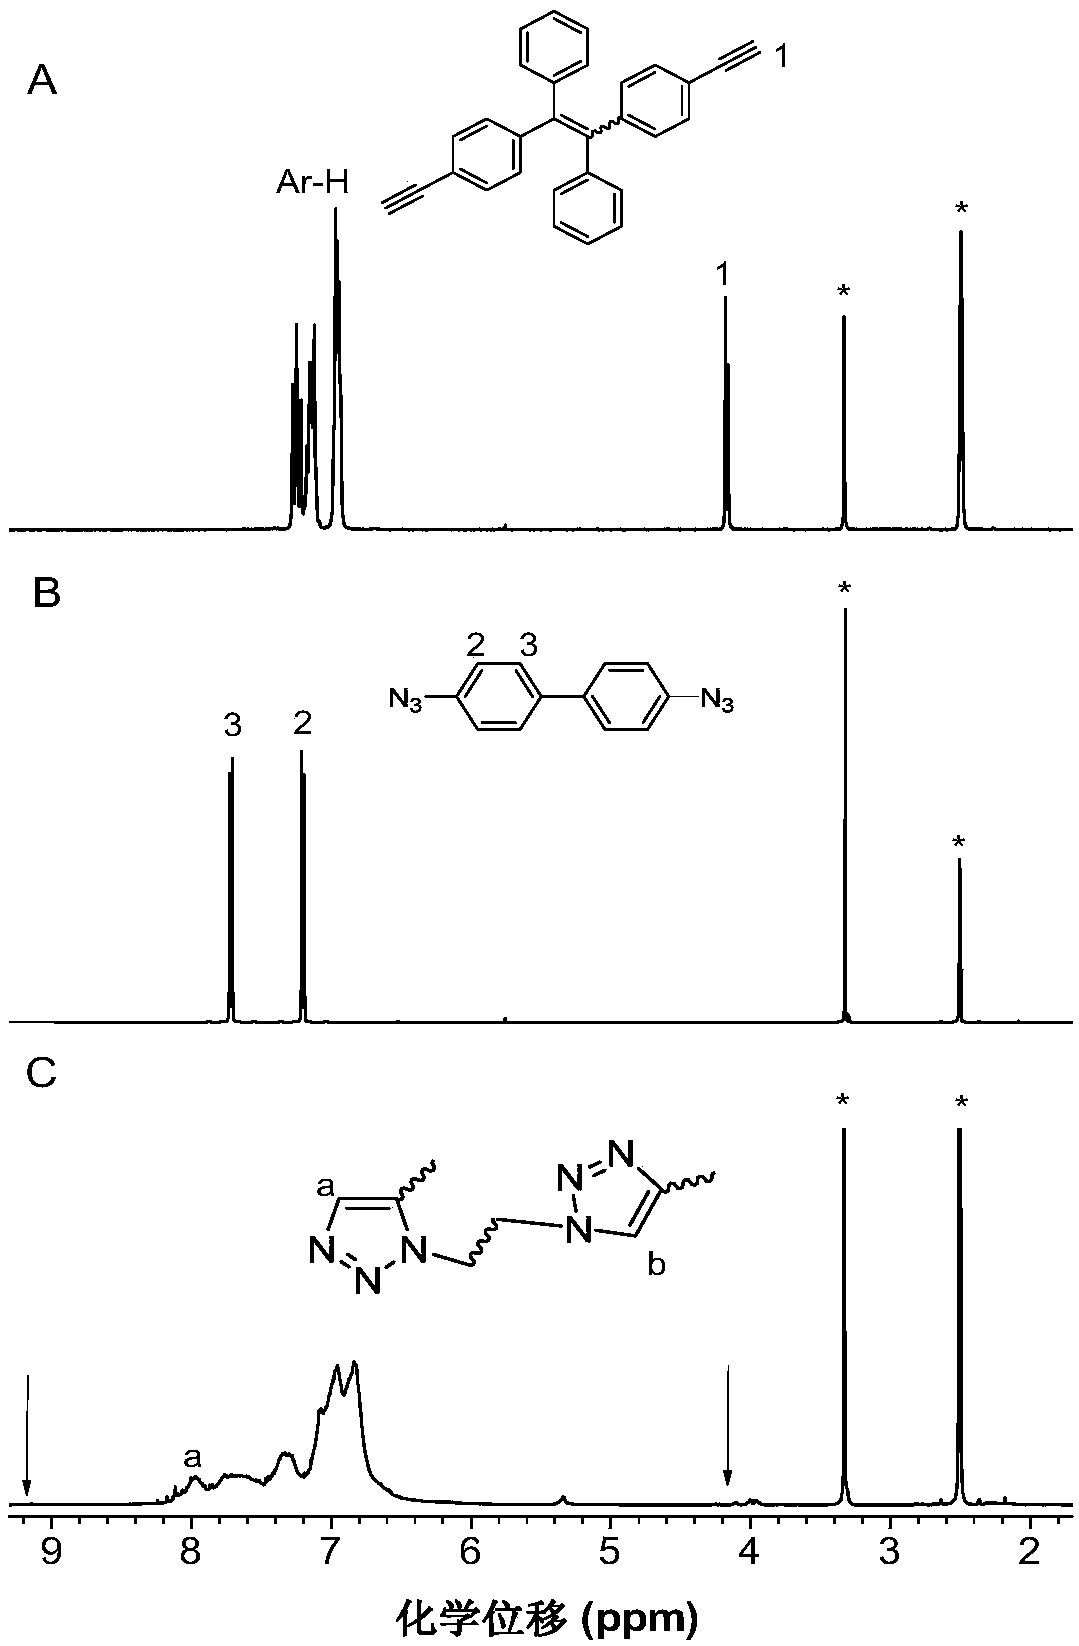 A kind of method for preparing 1,5-stereoregular polytriazole mediated by phosphazene base